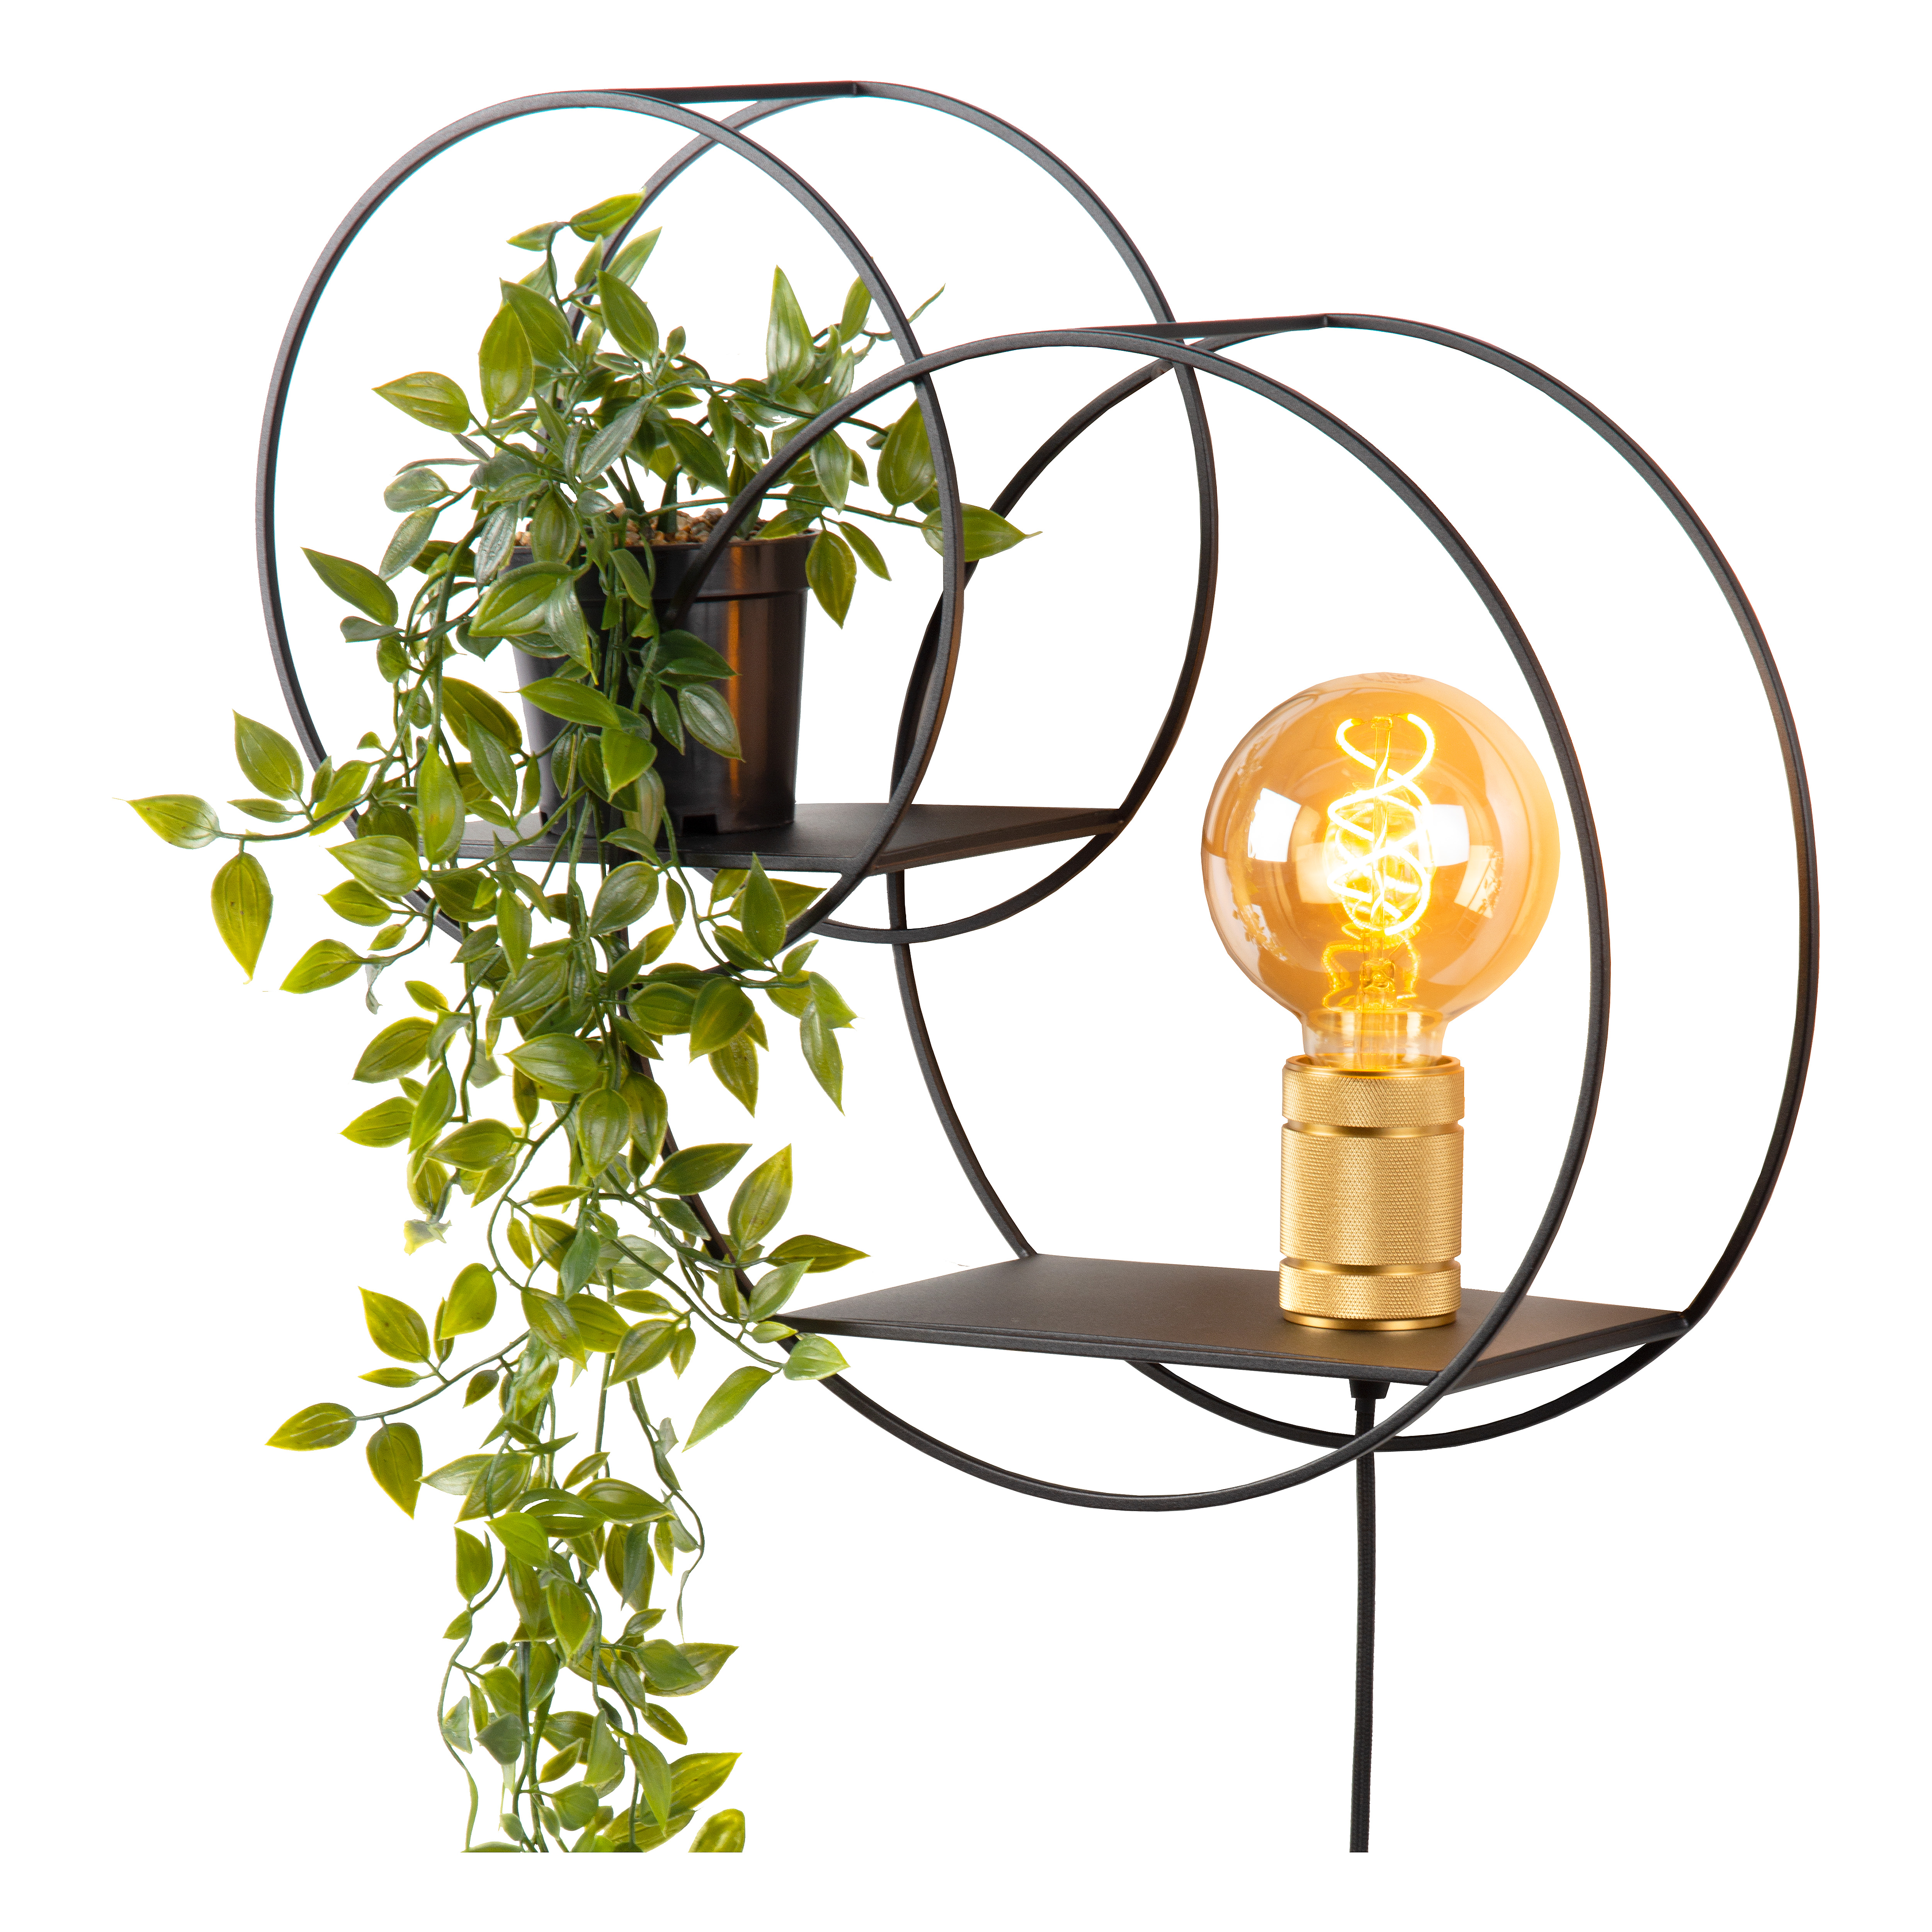 LAMPE LED POUR PLANTE "CIRCLE" 